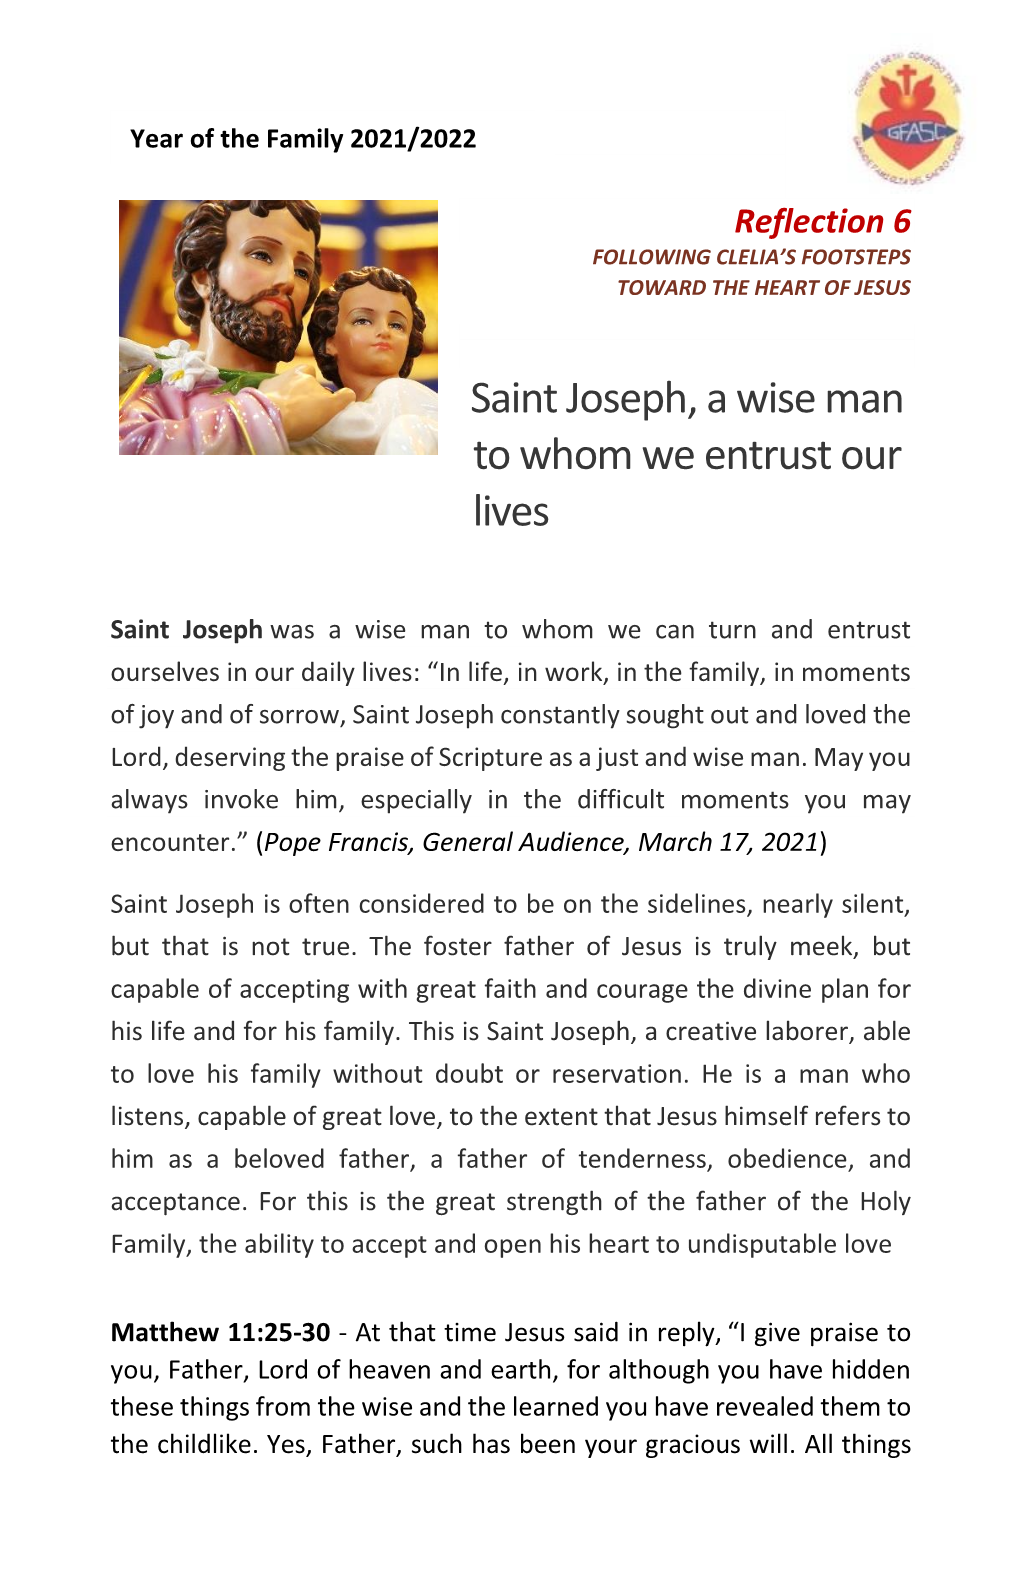 St. Joseph, a Wise